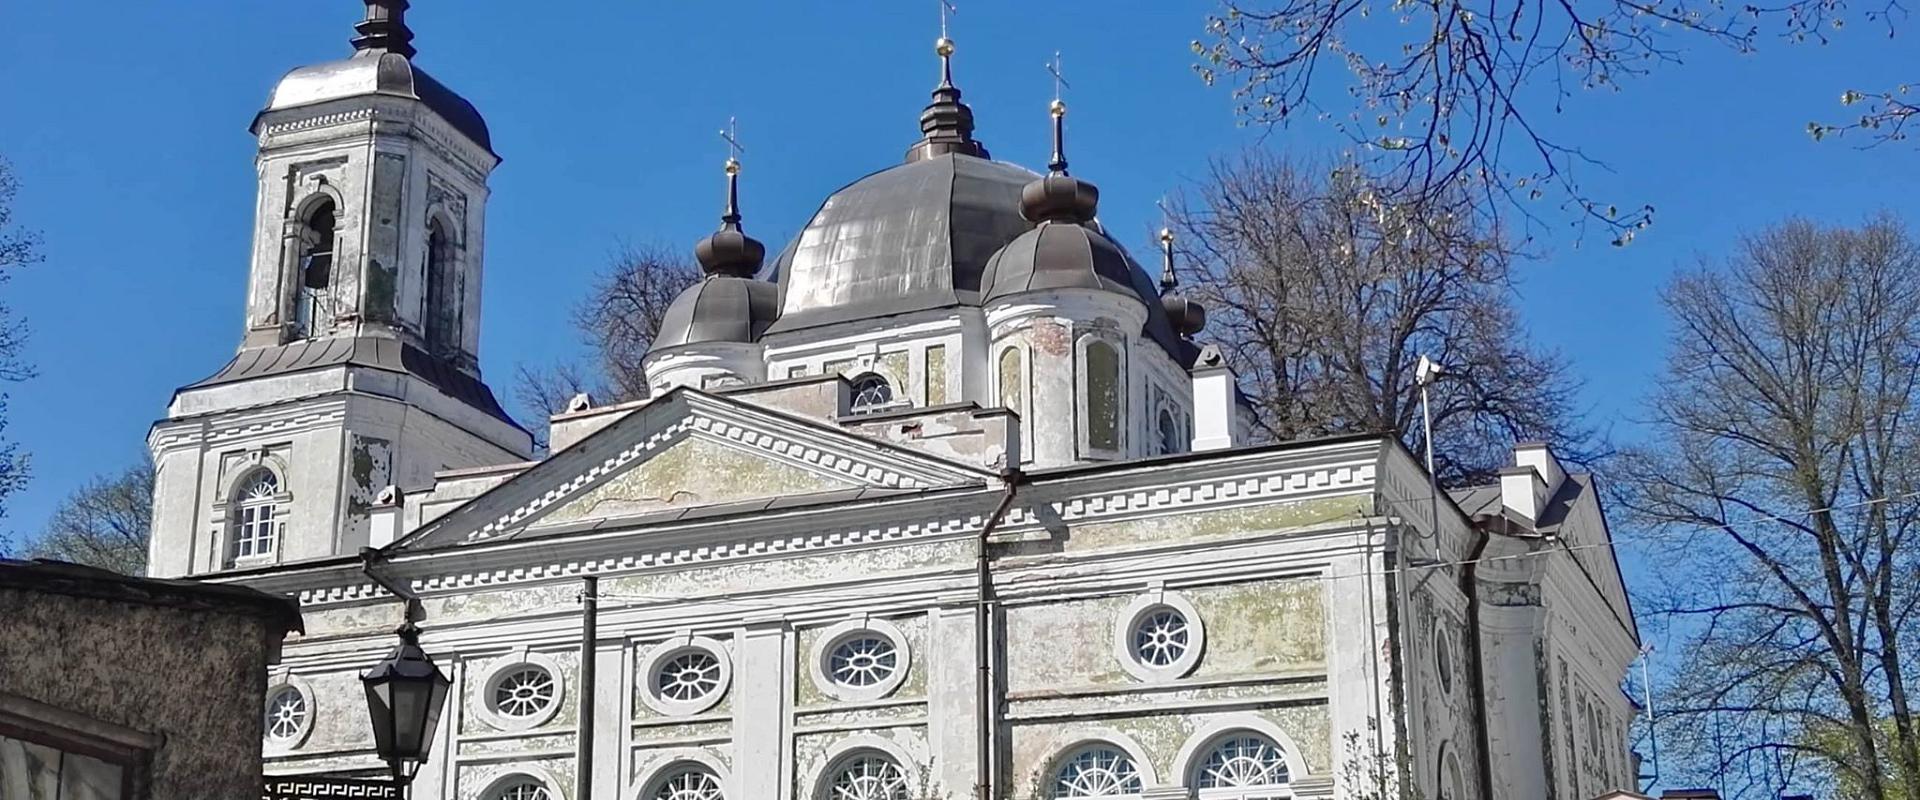 Tartu Uspenski Cathedral of the Estonian Apostolic Orthodox Church